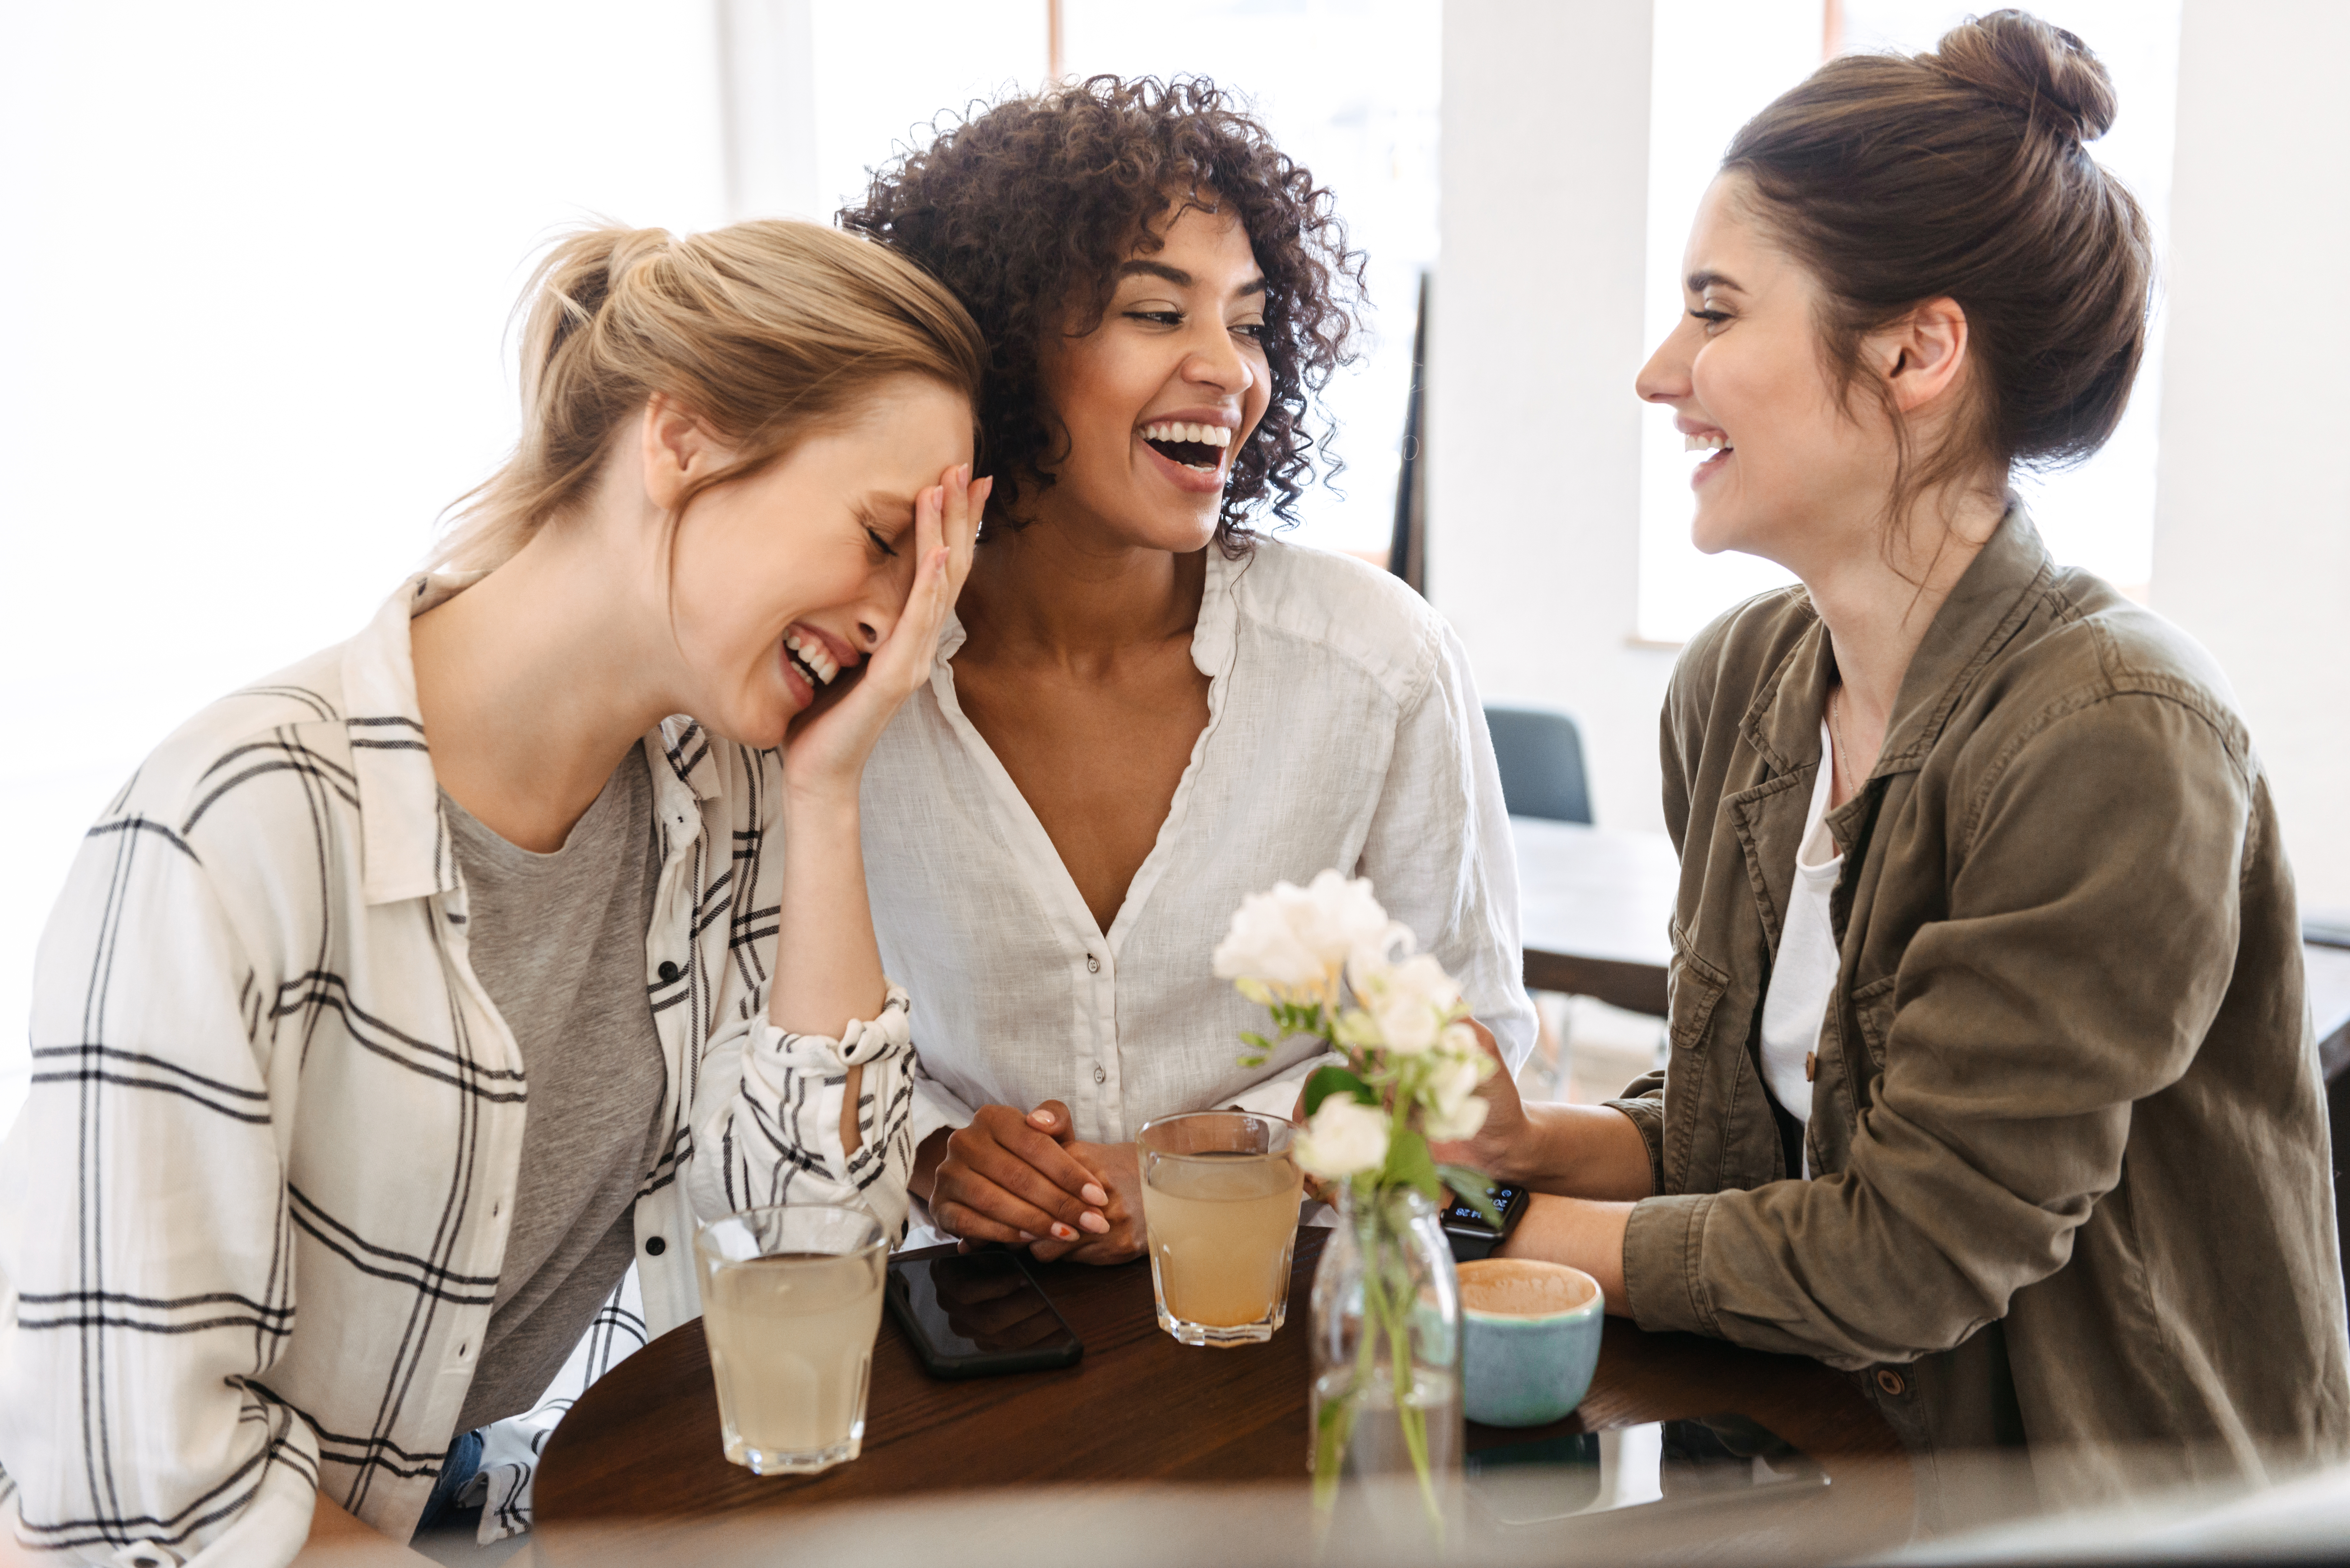 Three happy women enjoying coffee and drinks | Source: Shutterstock